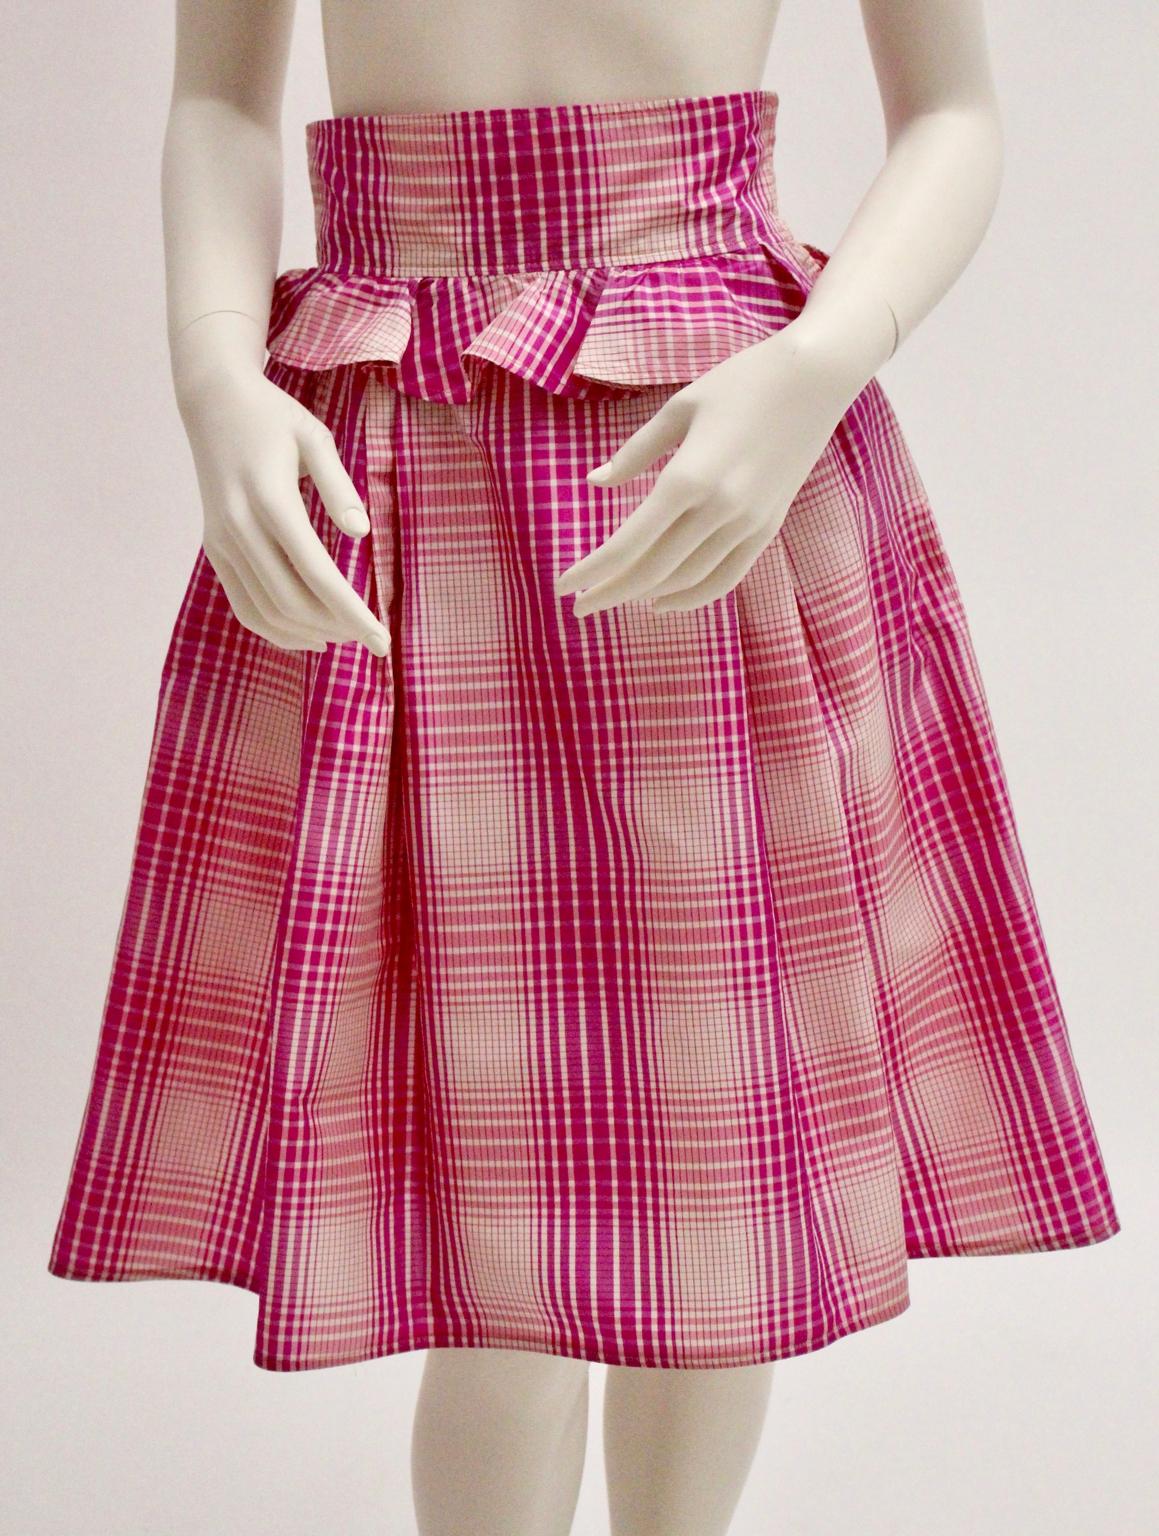 Silk Pink White Checker Vintage High Waist Skirt by Emanuel Ungaro 1980s Paris For Sale 1